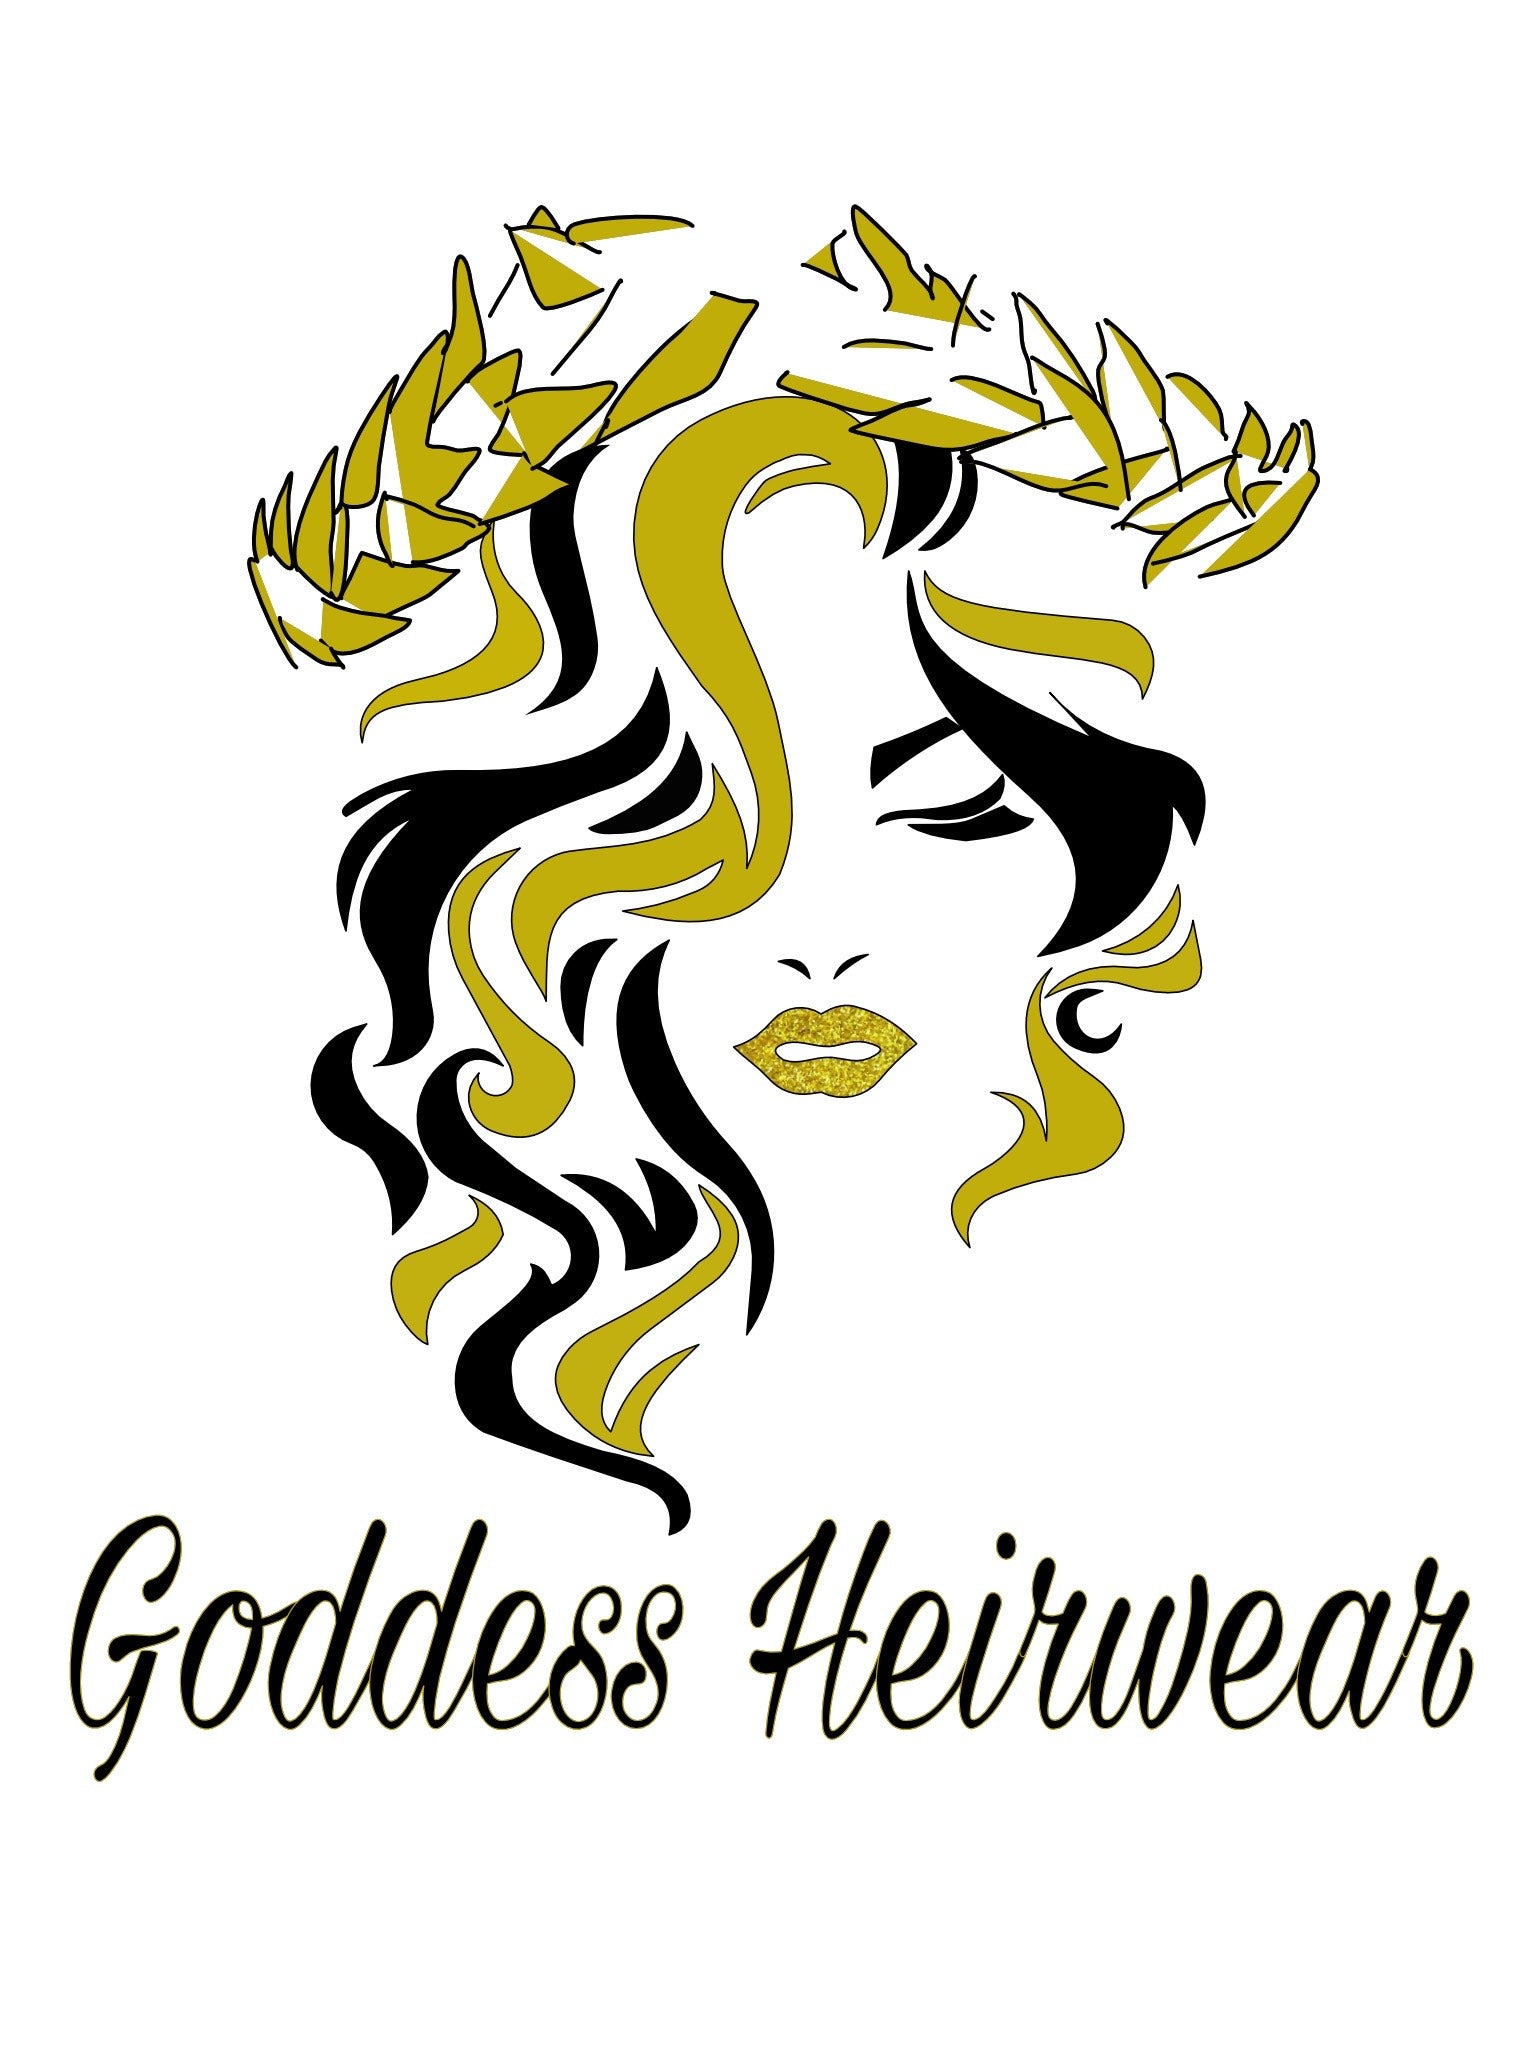 Goddess Heirwear